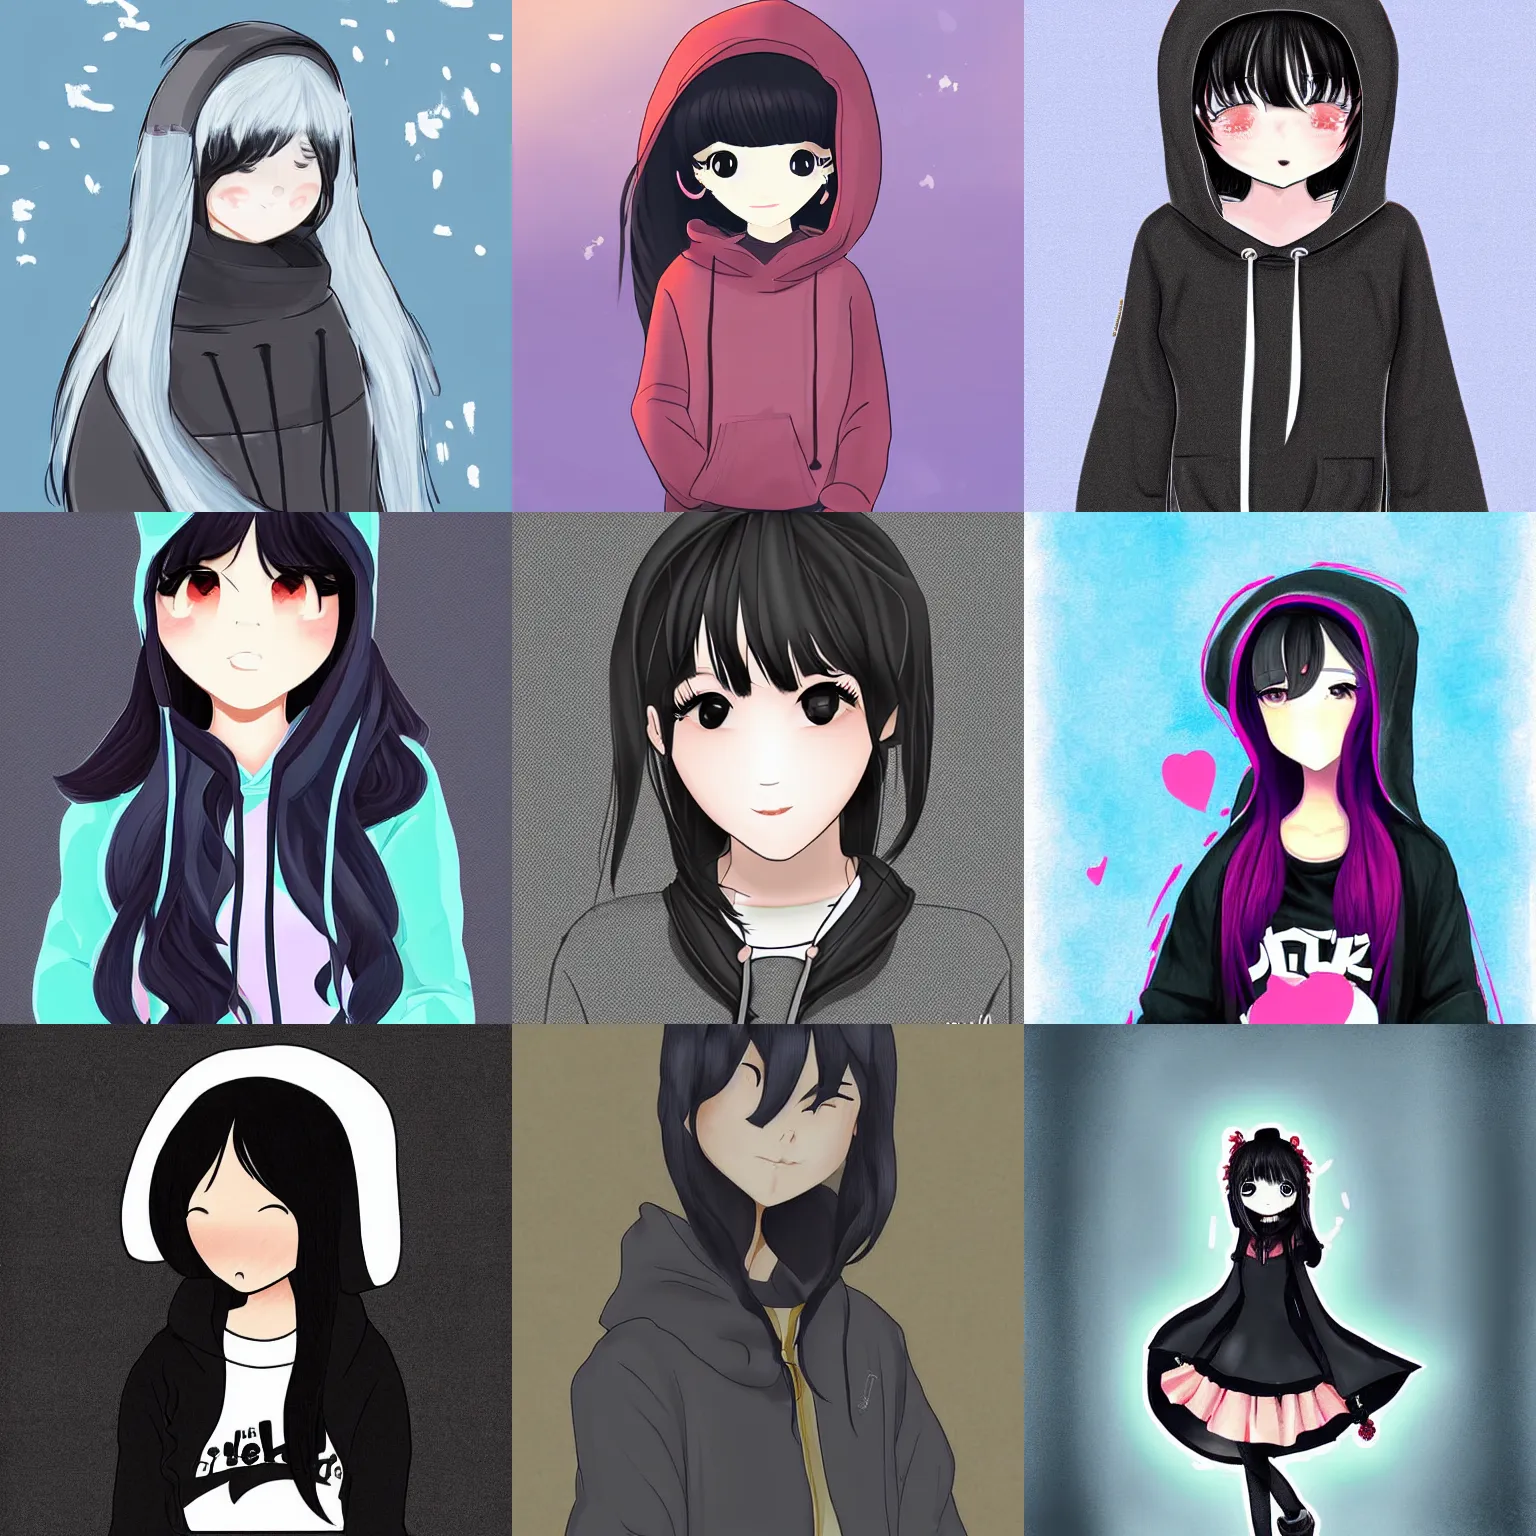 Prompt: digital art of black haired cute girl wearing hoodie drawn by mika pikazo